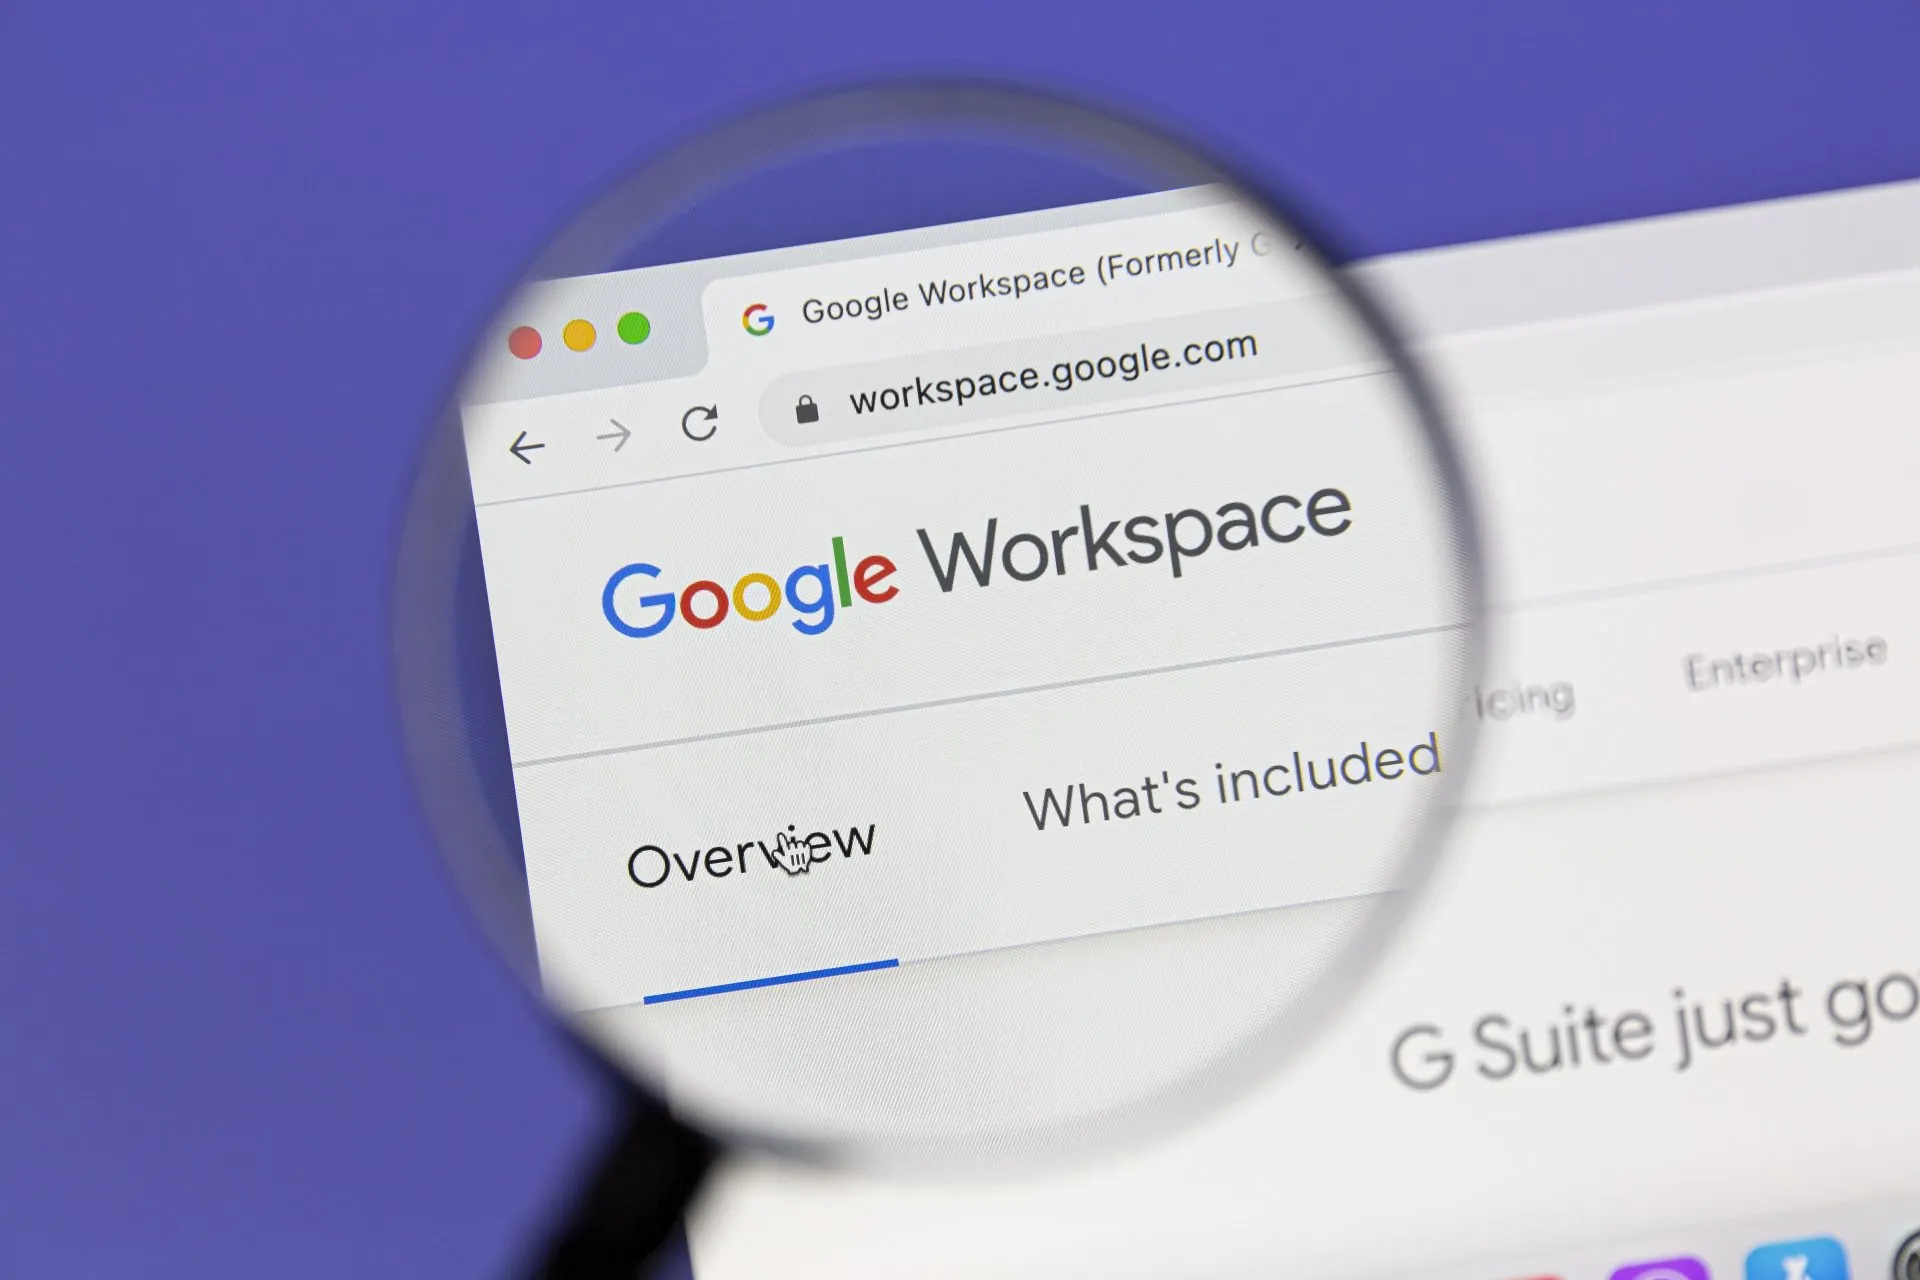 Introducing Google Workspace image